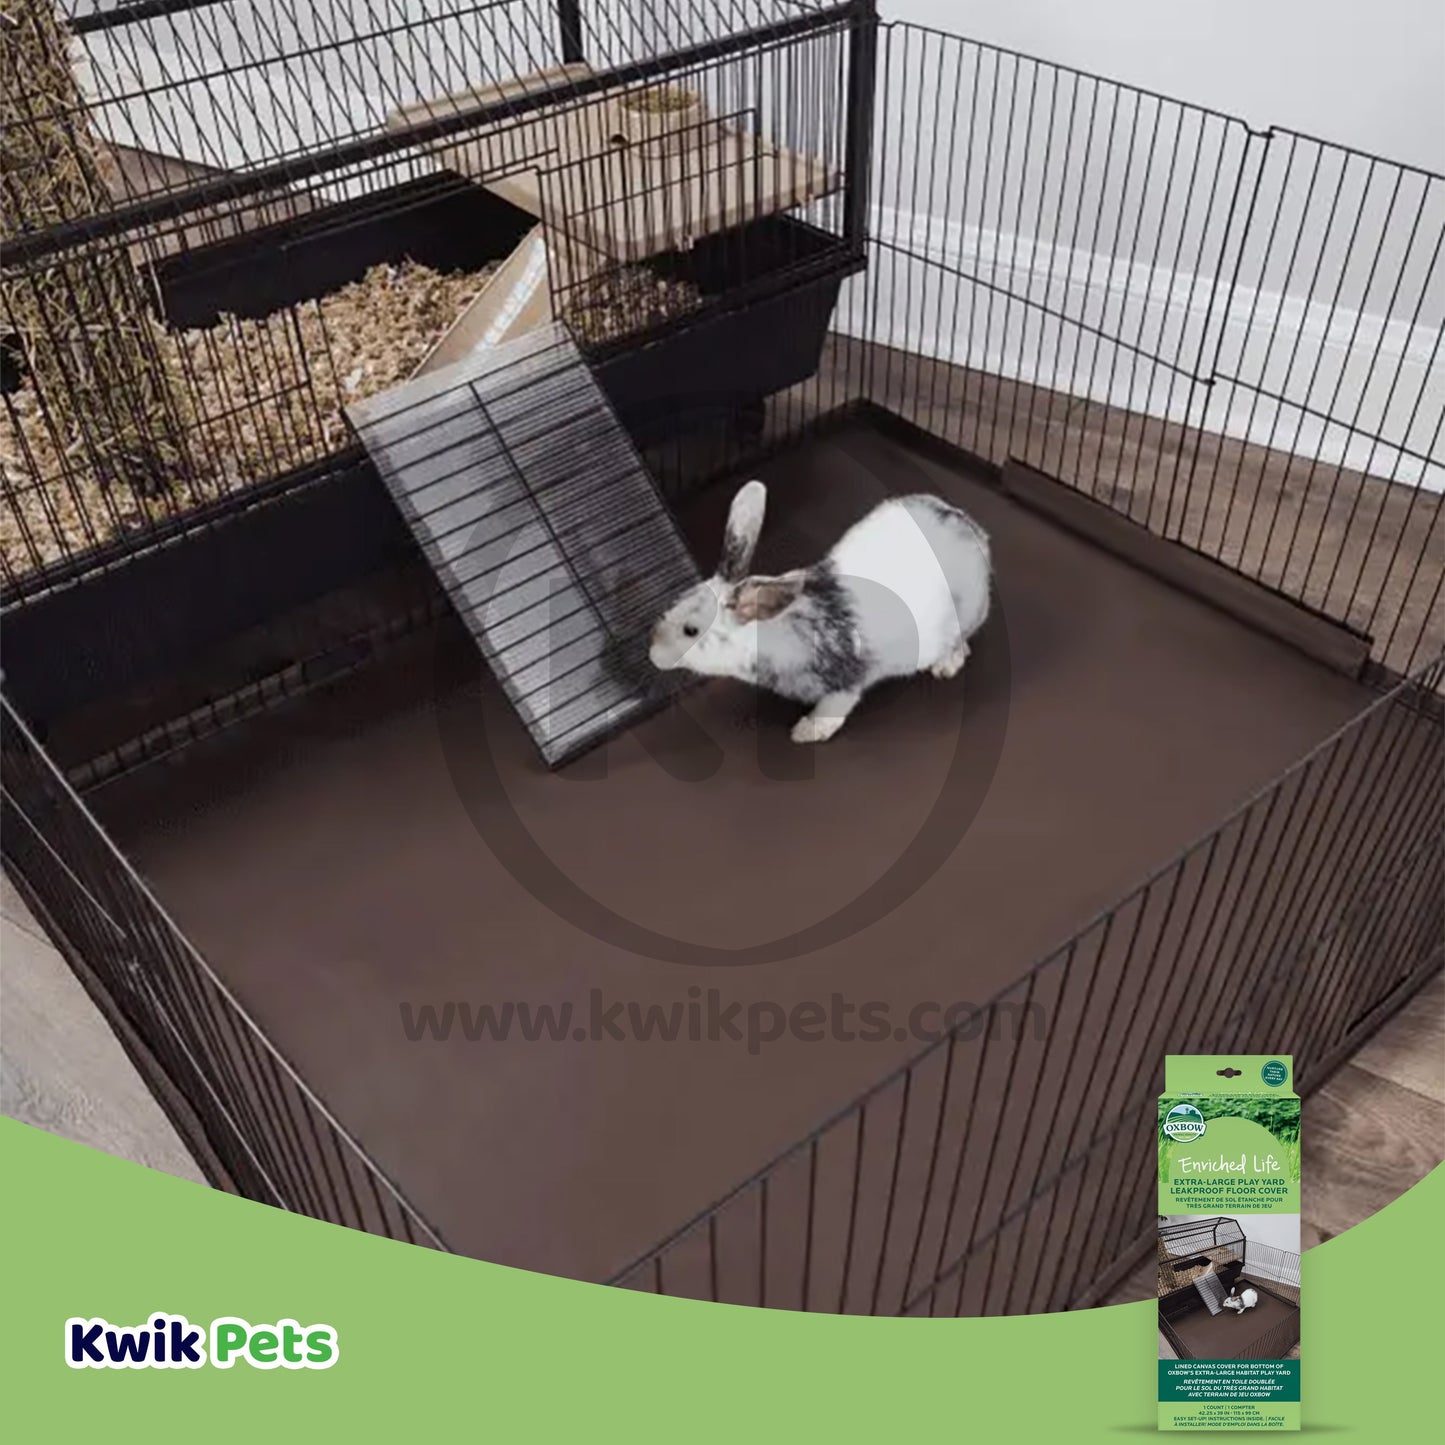 Oxbow Animal Health Enriched Life Leakproof Play Yard Floor Cover, XL - Kwik Pets